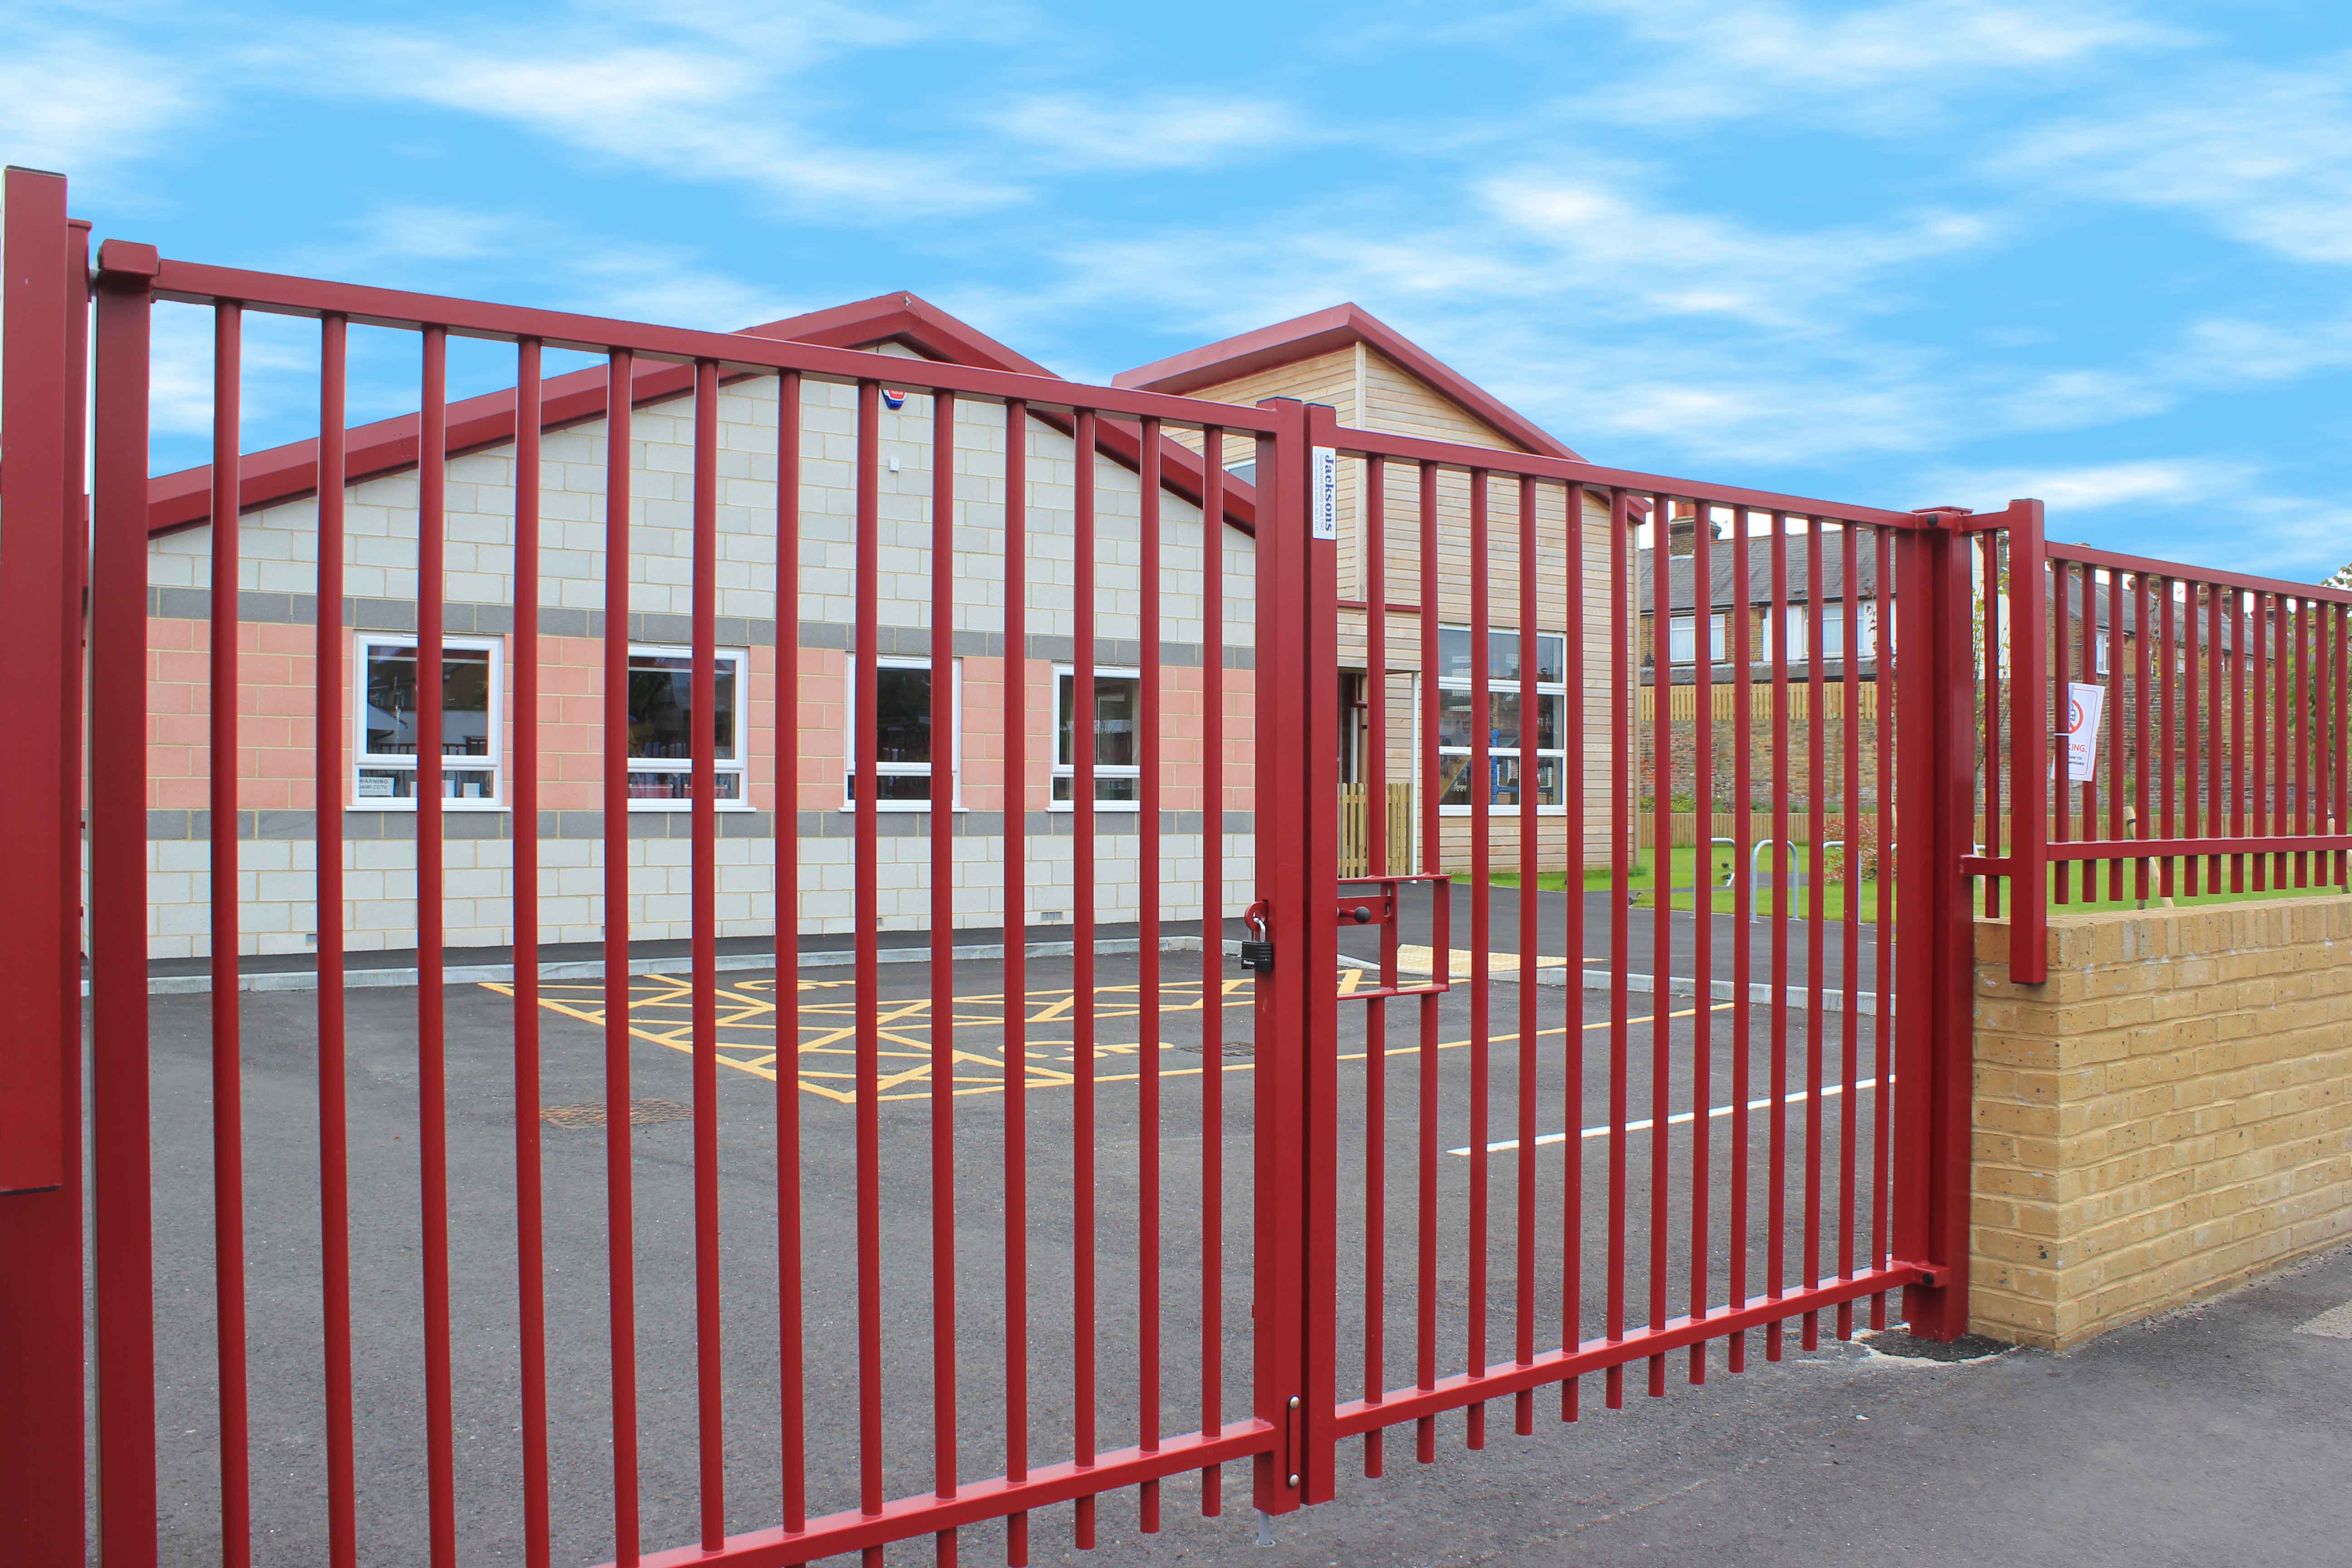 School ground fencing